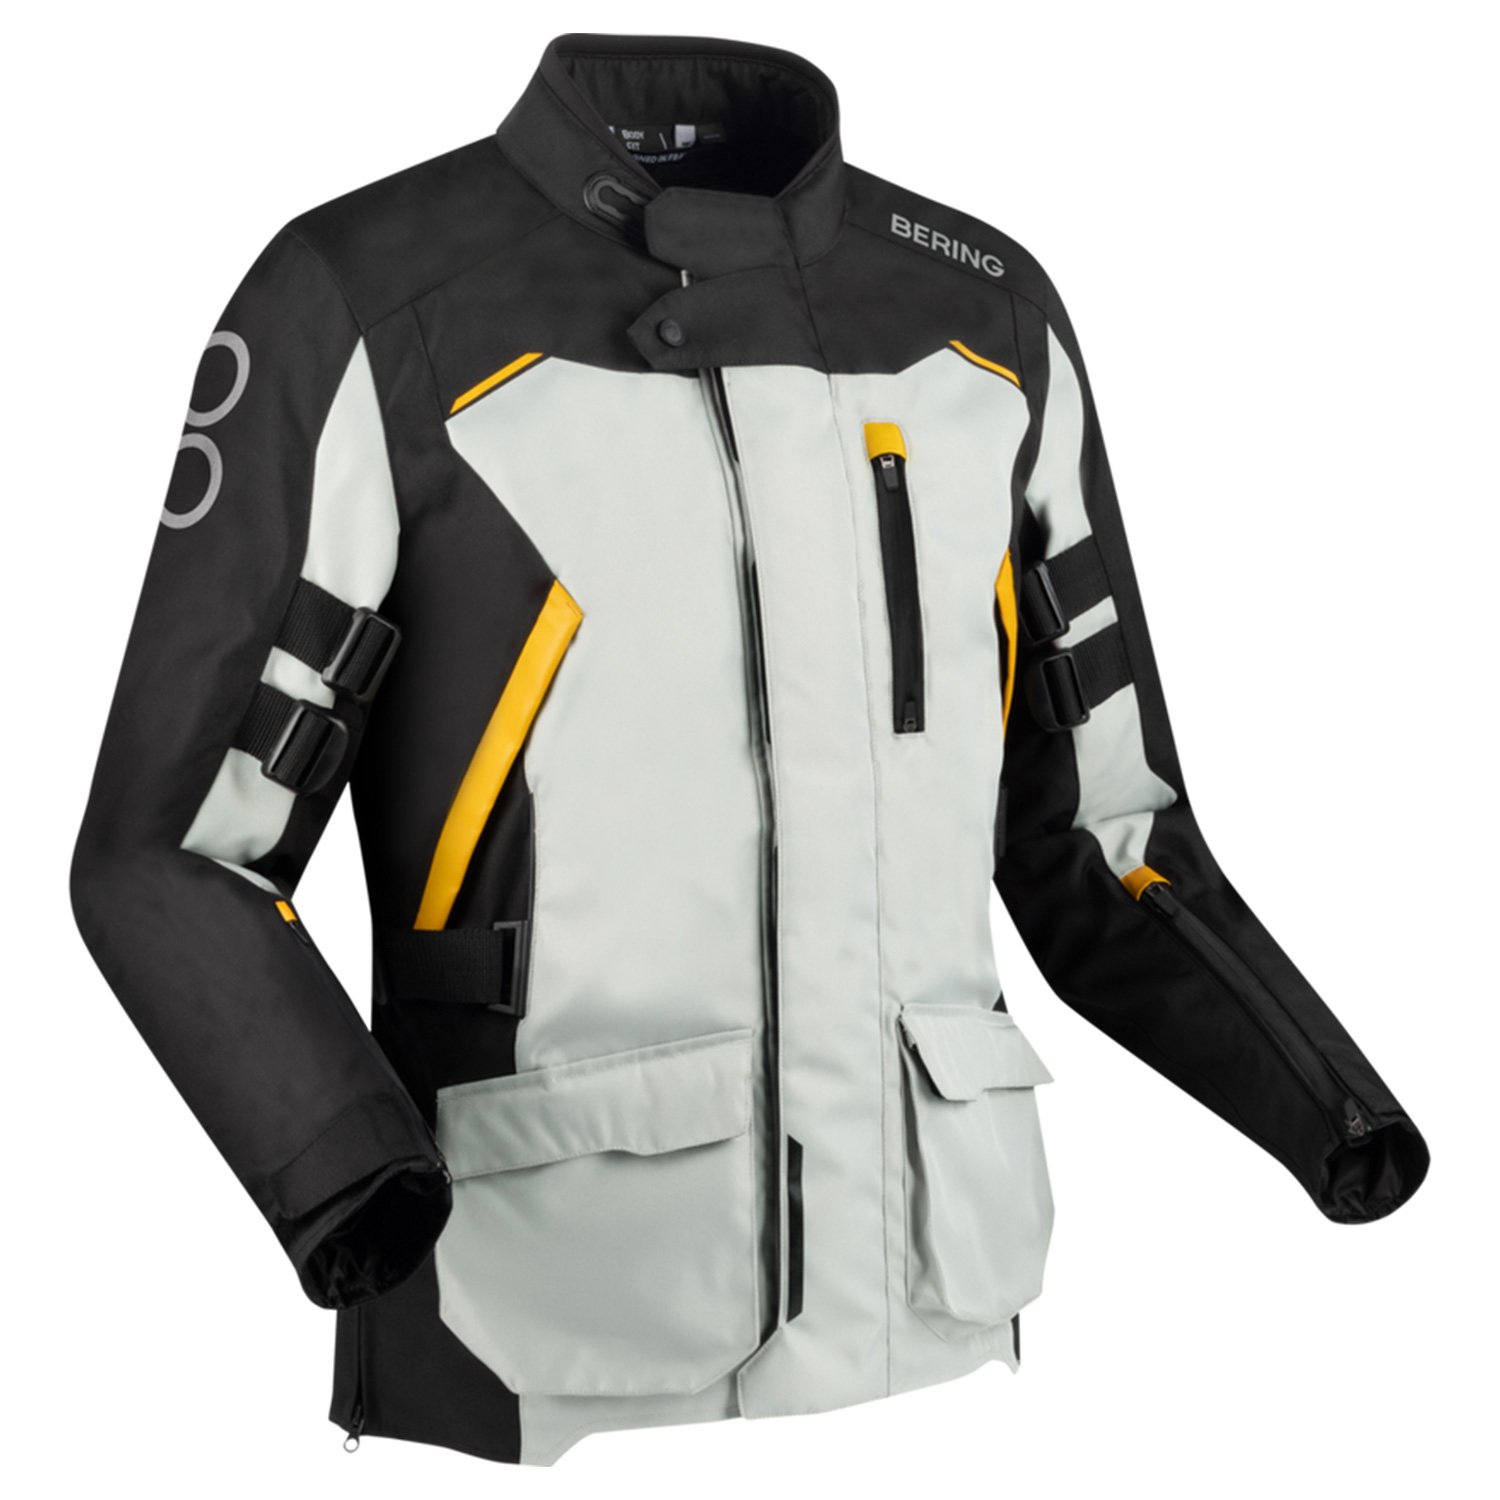 Image of Bering Zephyr Jacket Black Grey Yellow Size 4XL ID 3660815181065